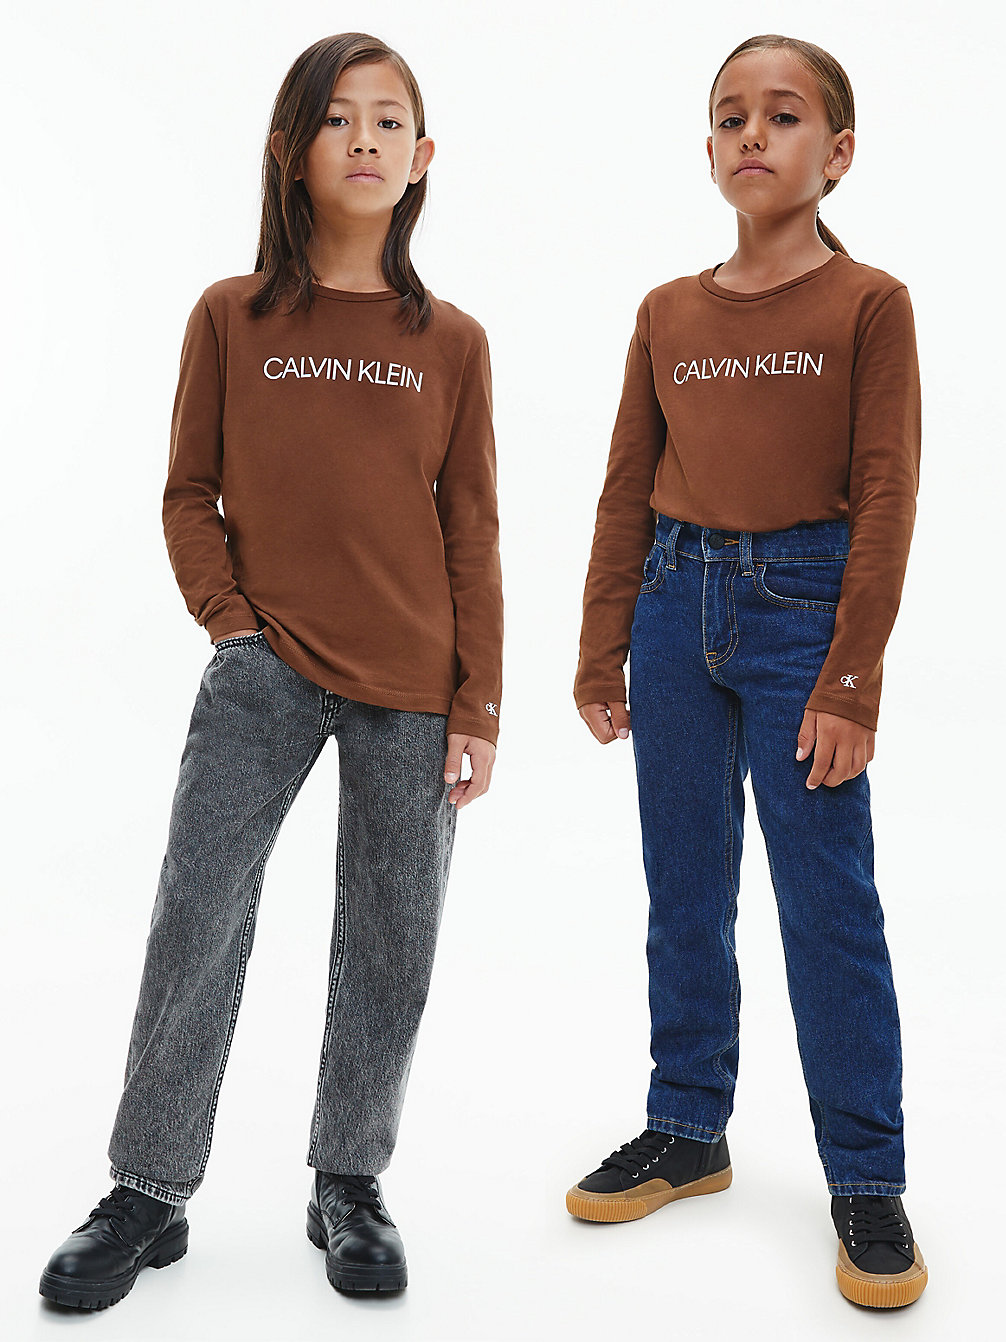 MILK CHOCOLATE T-Shirt Unisexe À Manches Longues undefined kids unisex Calvin Klein